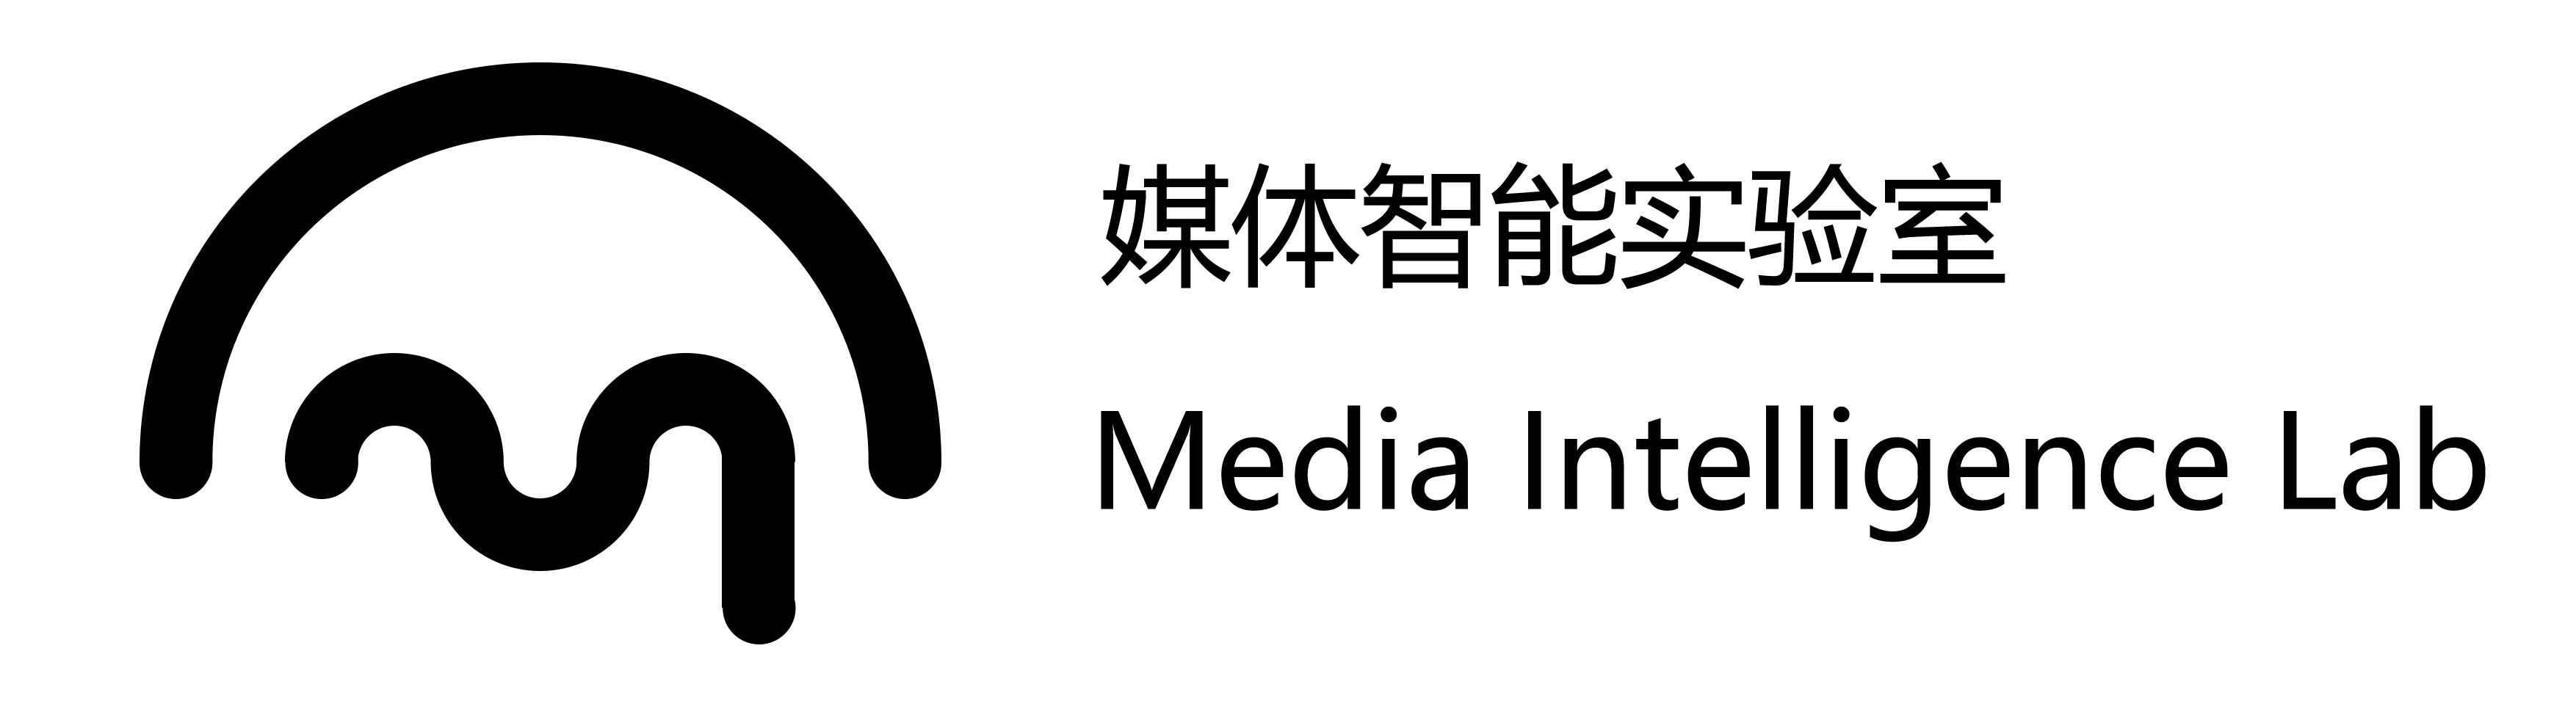 Media Intelligence Laboratory